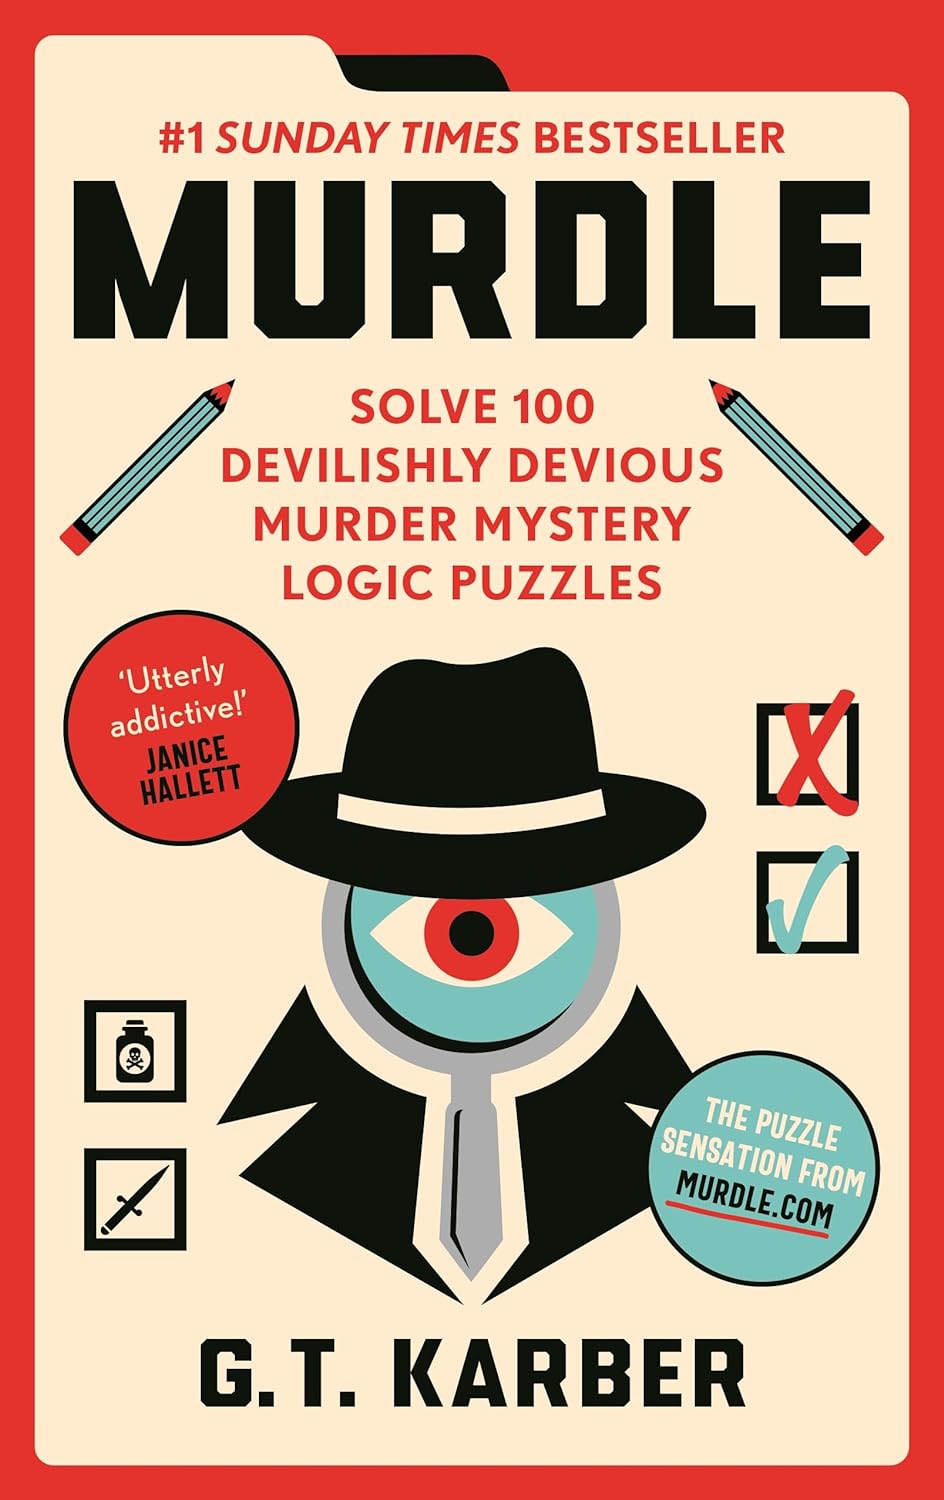 Murdle Volume 1: Solve 100 Devilishly Devious Murder Mystery Logic Puzzles